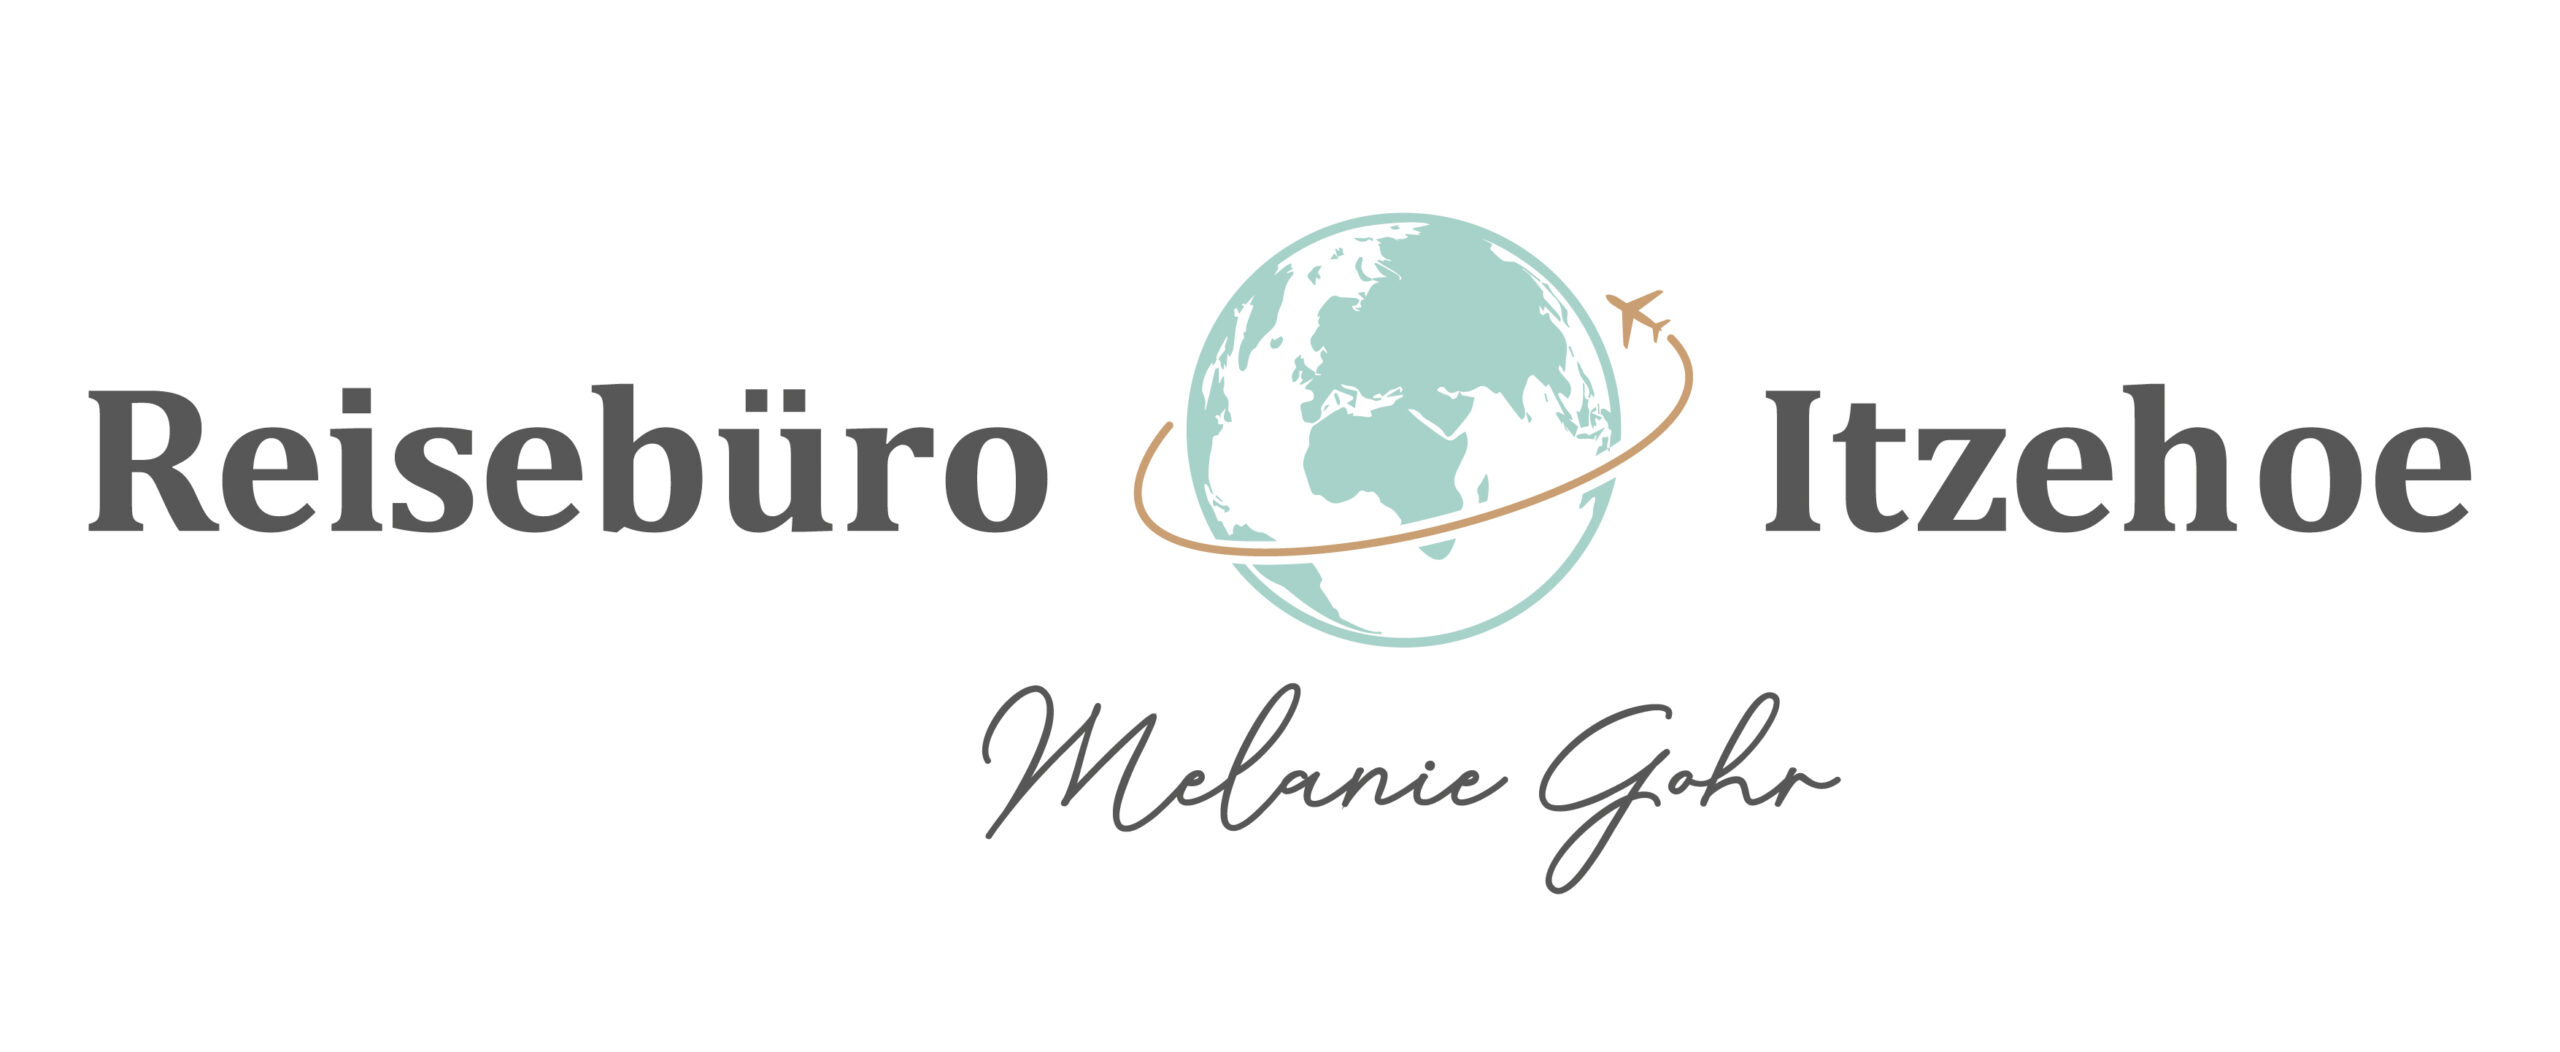 Reisebüro Itzehoe – Melanie Gohr